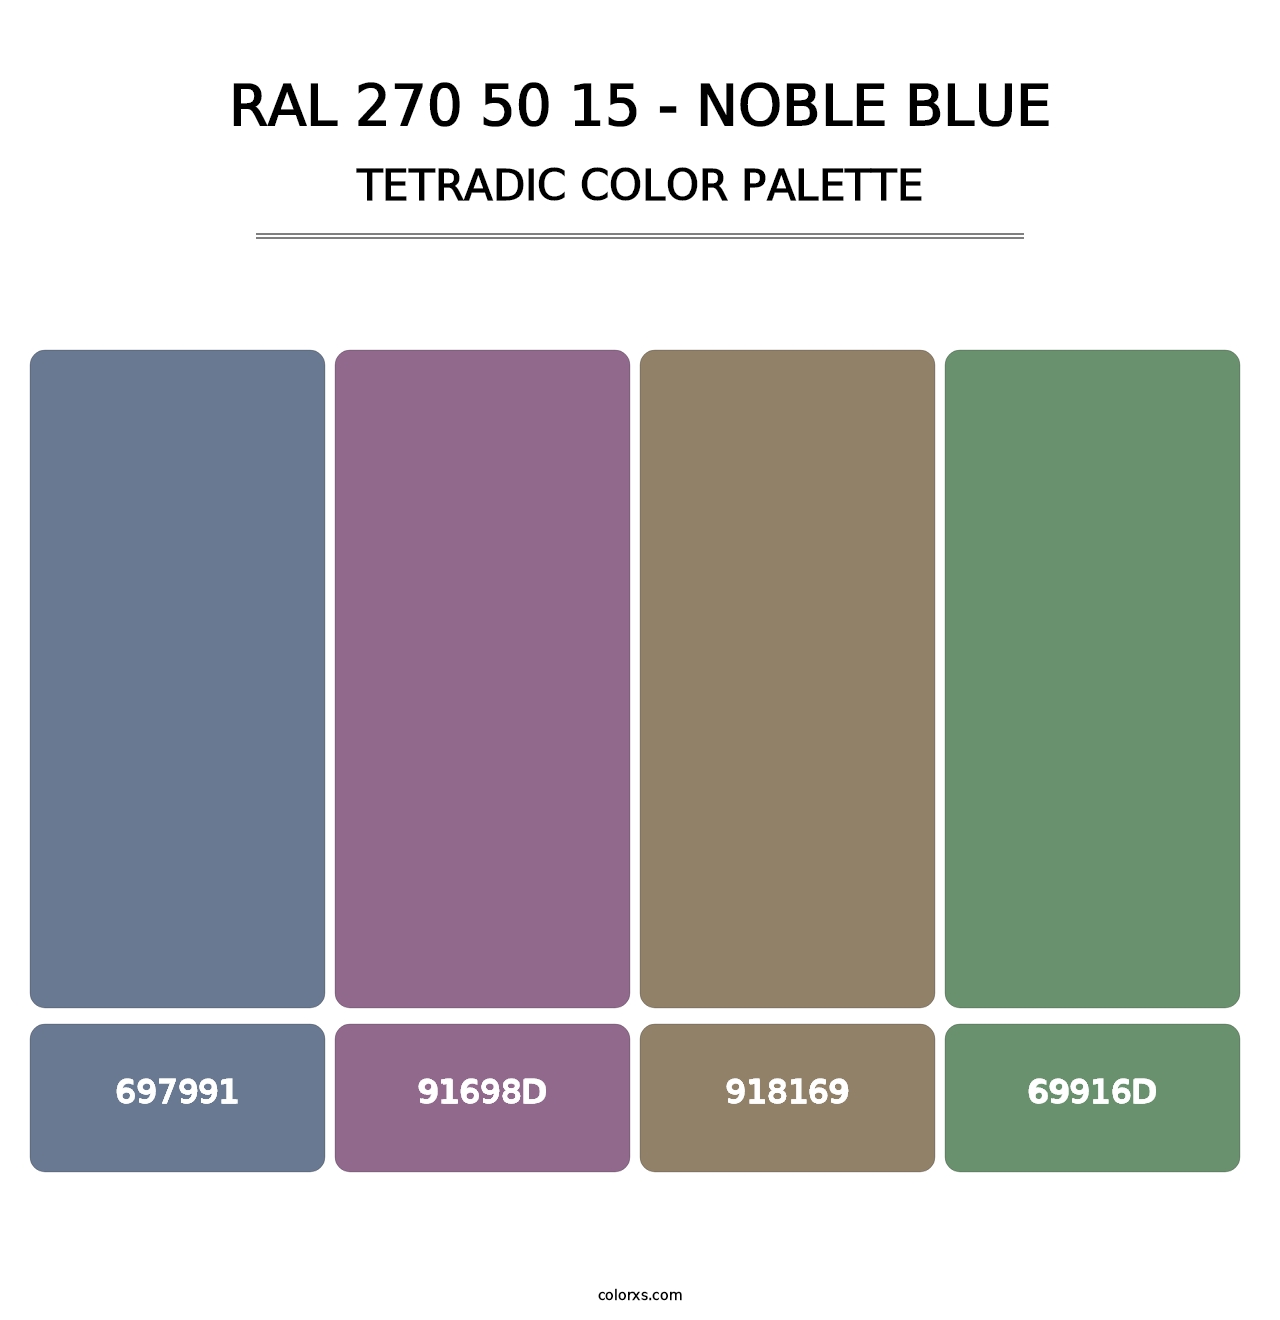 RAL 270 50 15 - Noble Blue - Tetradic Color Palette